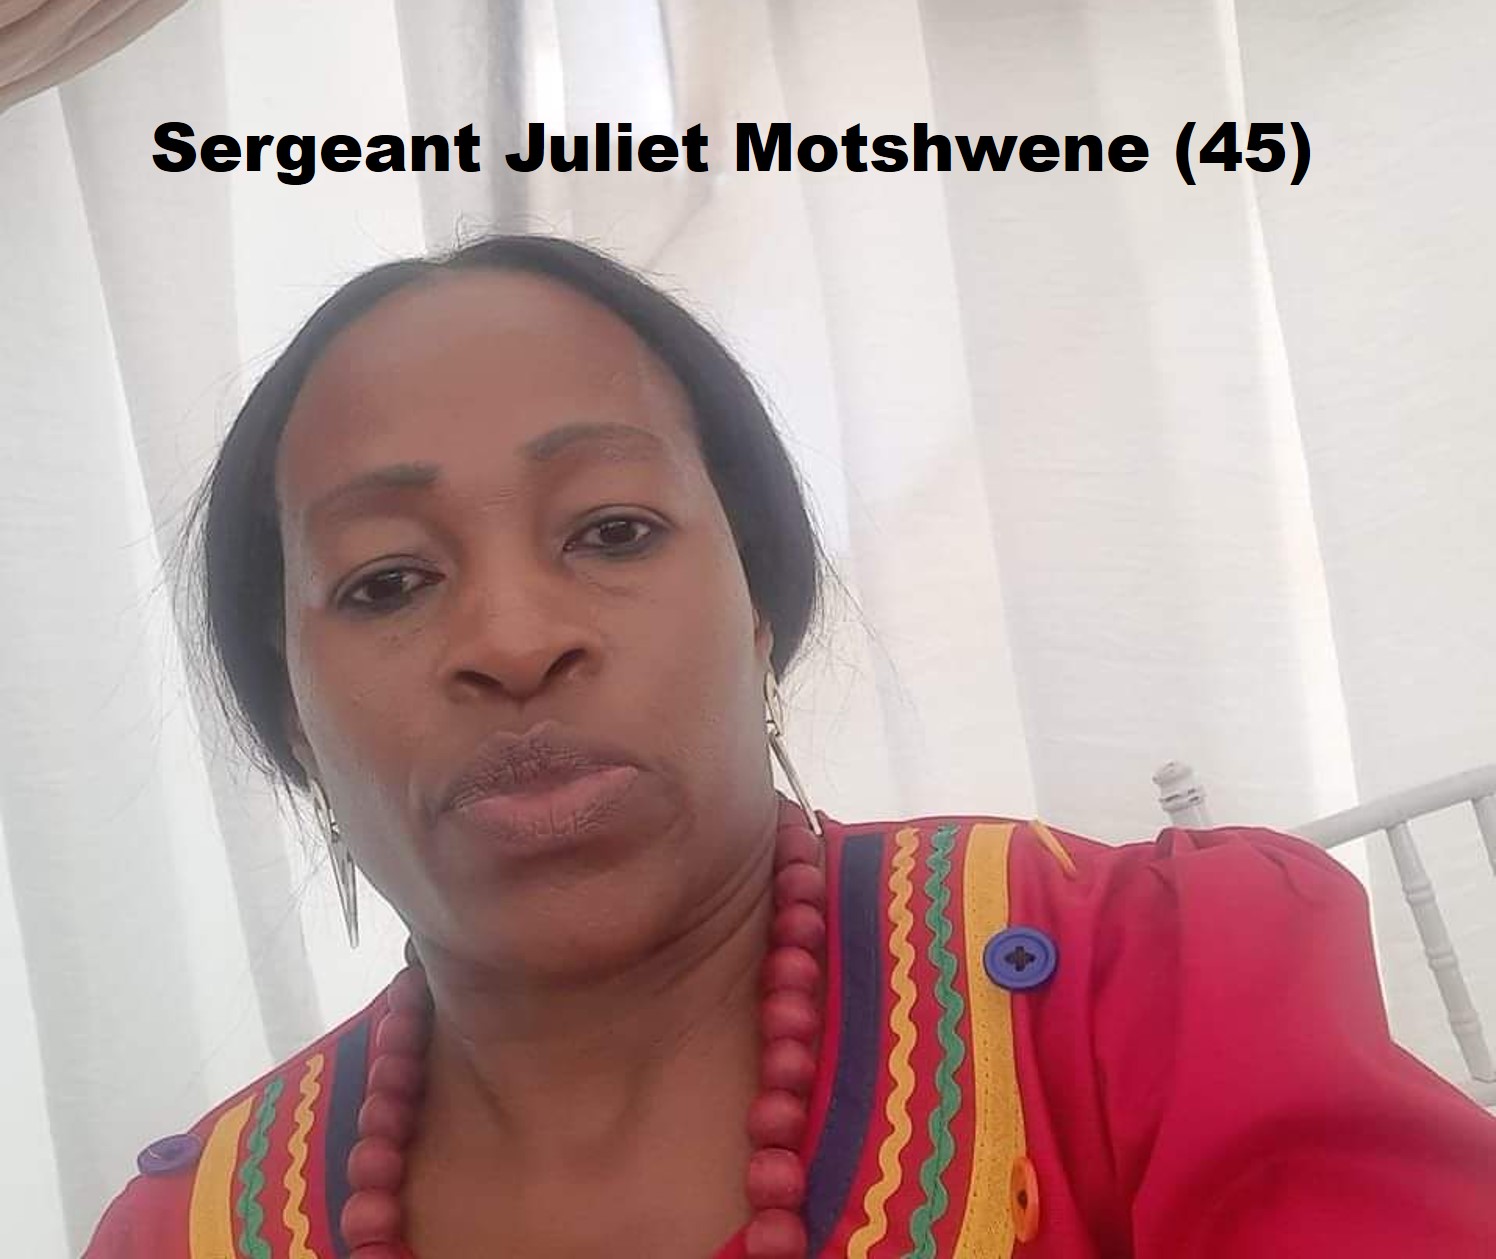 Acting Provincial Commissioner saddened by passing of missing Sergeant Juliet Motshwene